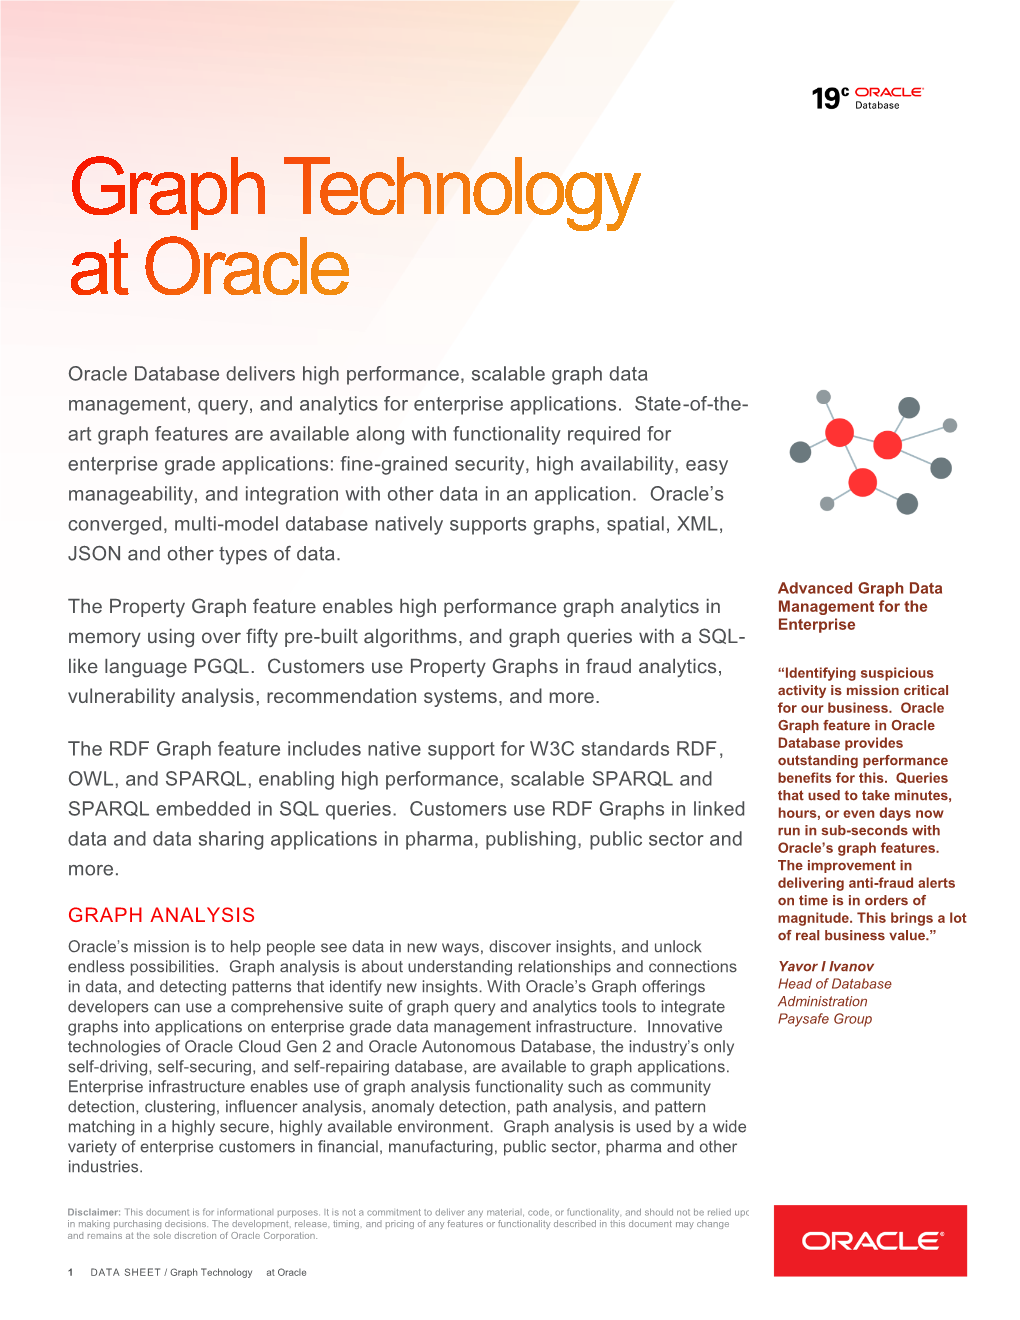 Graph Technology at Oracle Data Sheet